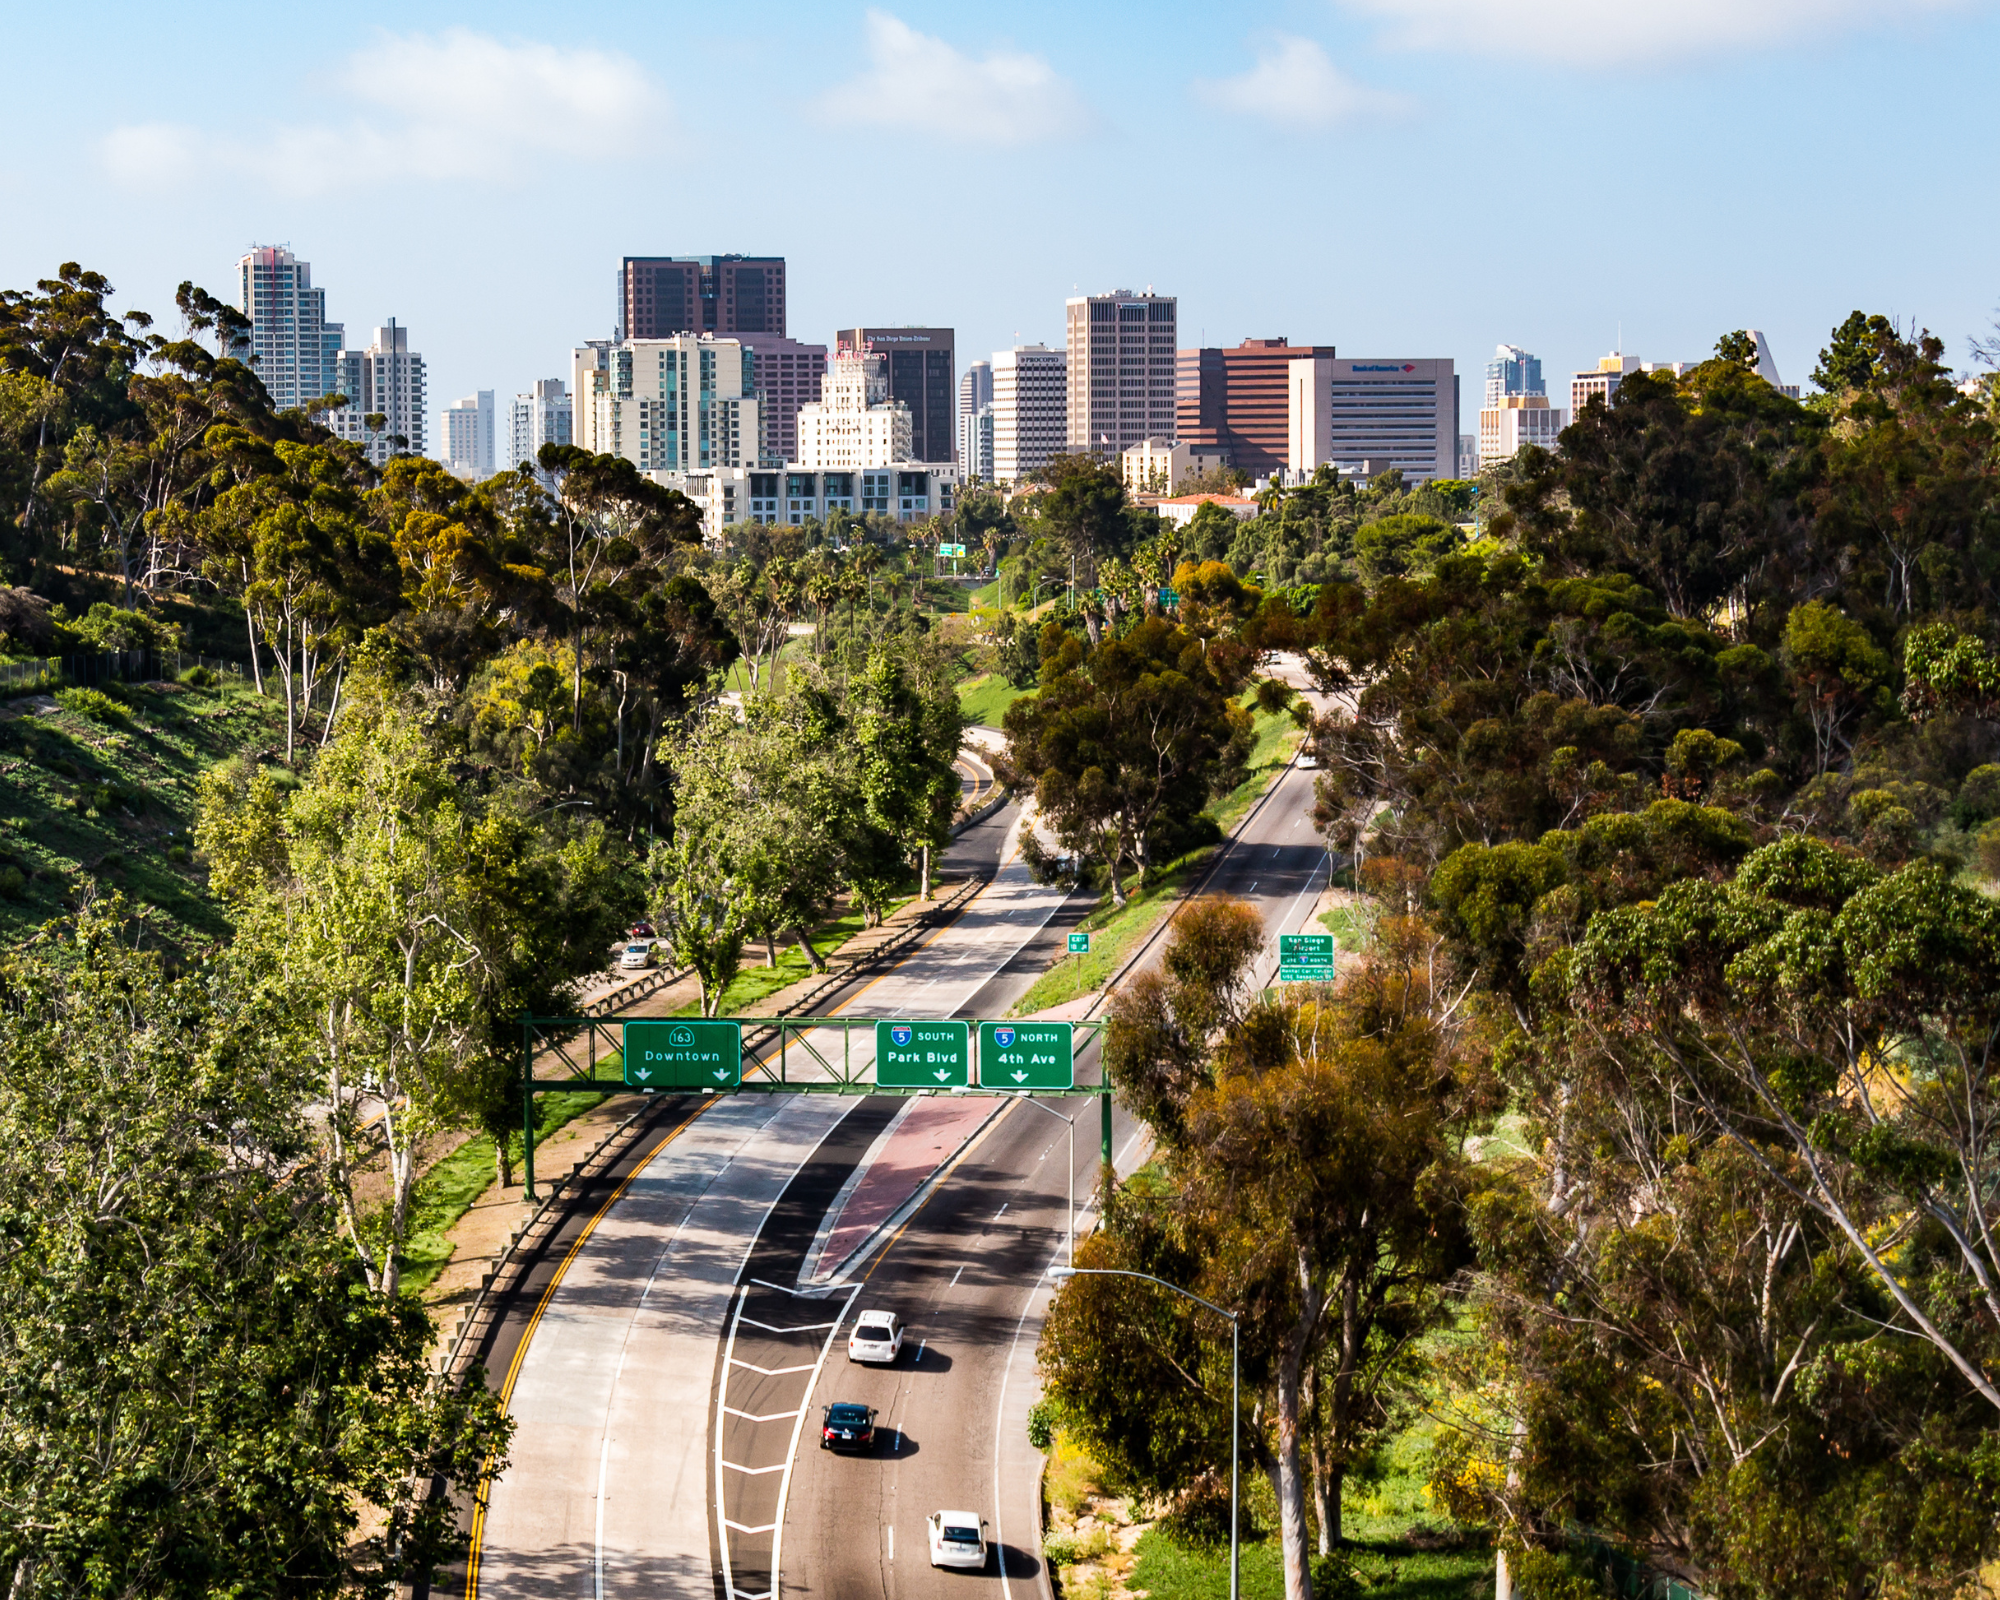 Urban Freeway with greenery - San Diego and Balboa Park